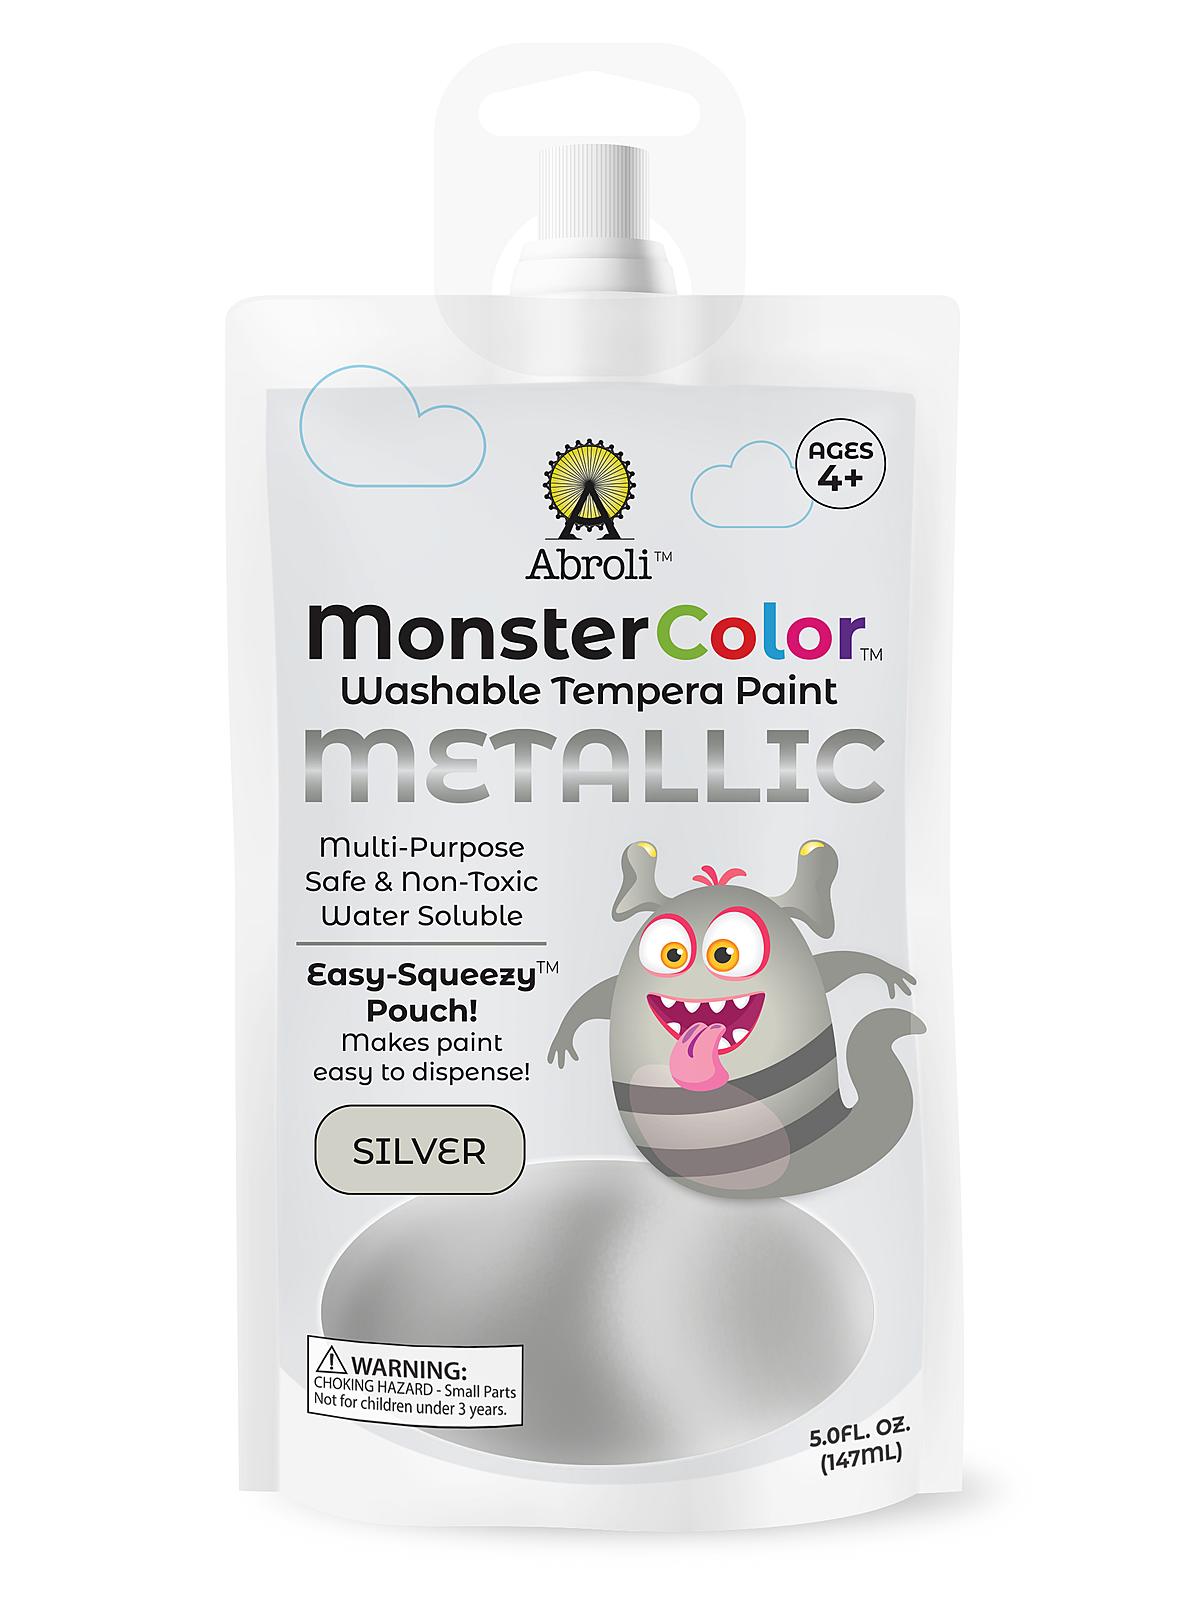 Monster Color Tempera Paint Metallic Silver 5 Oz. Pouch